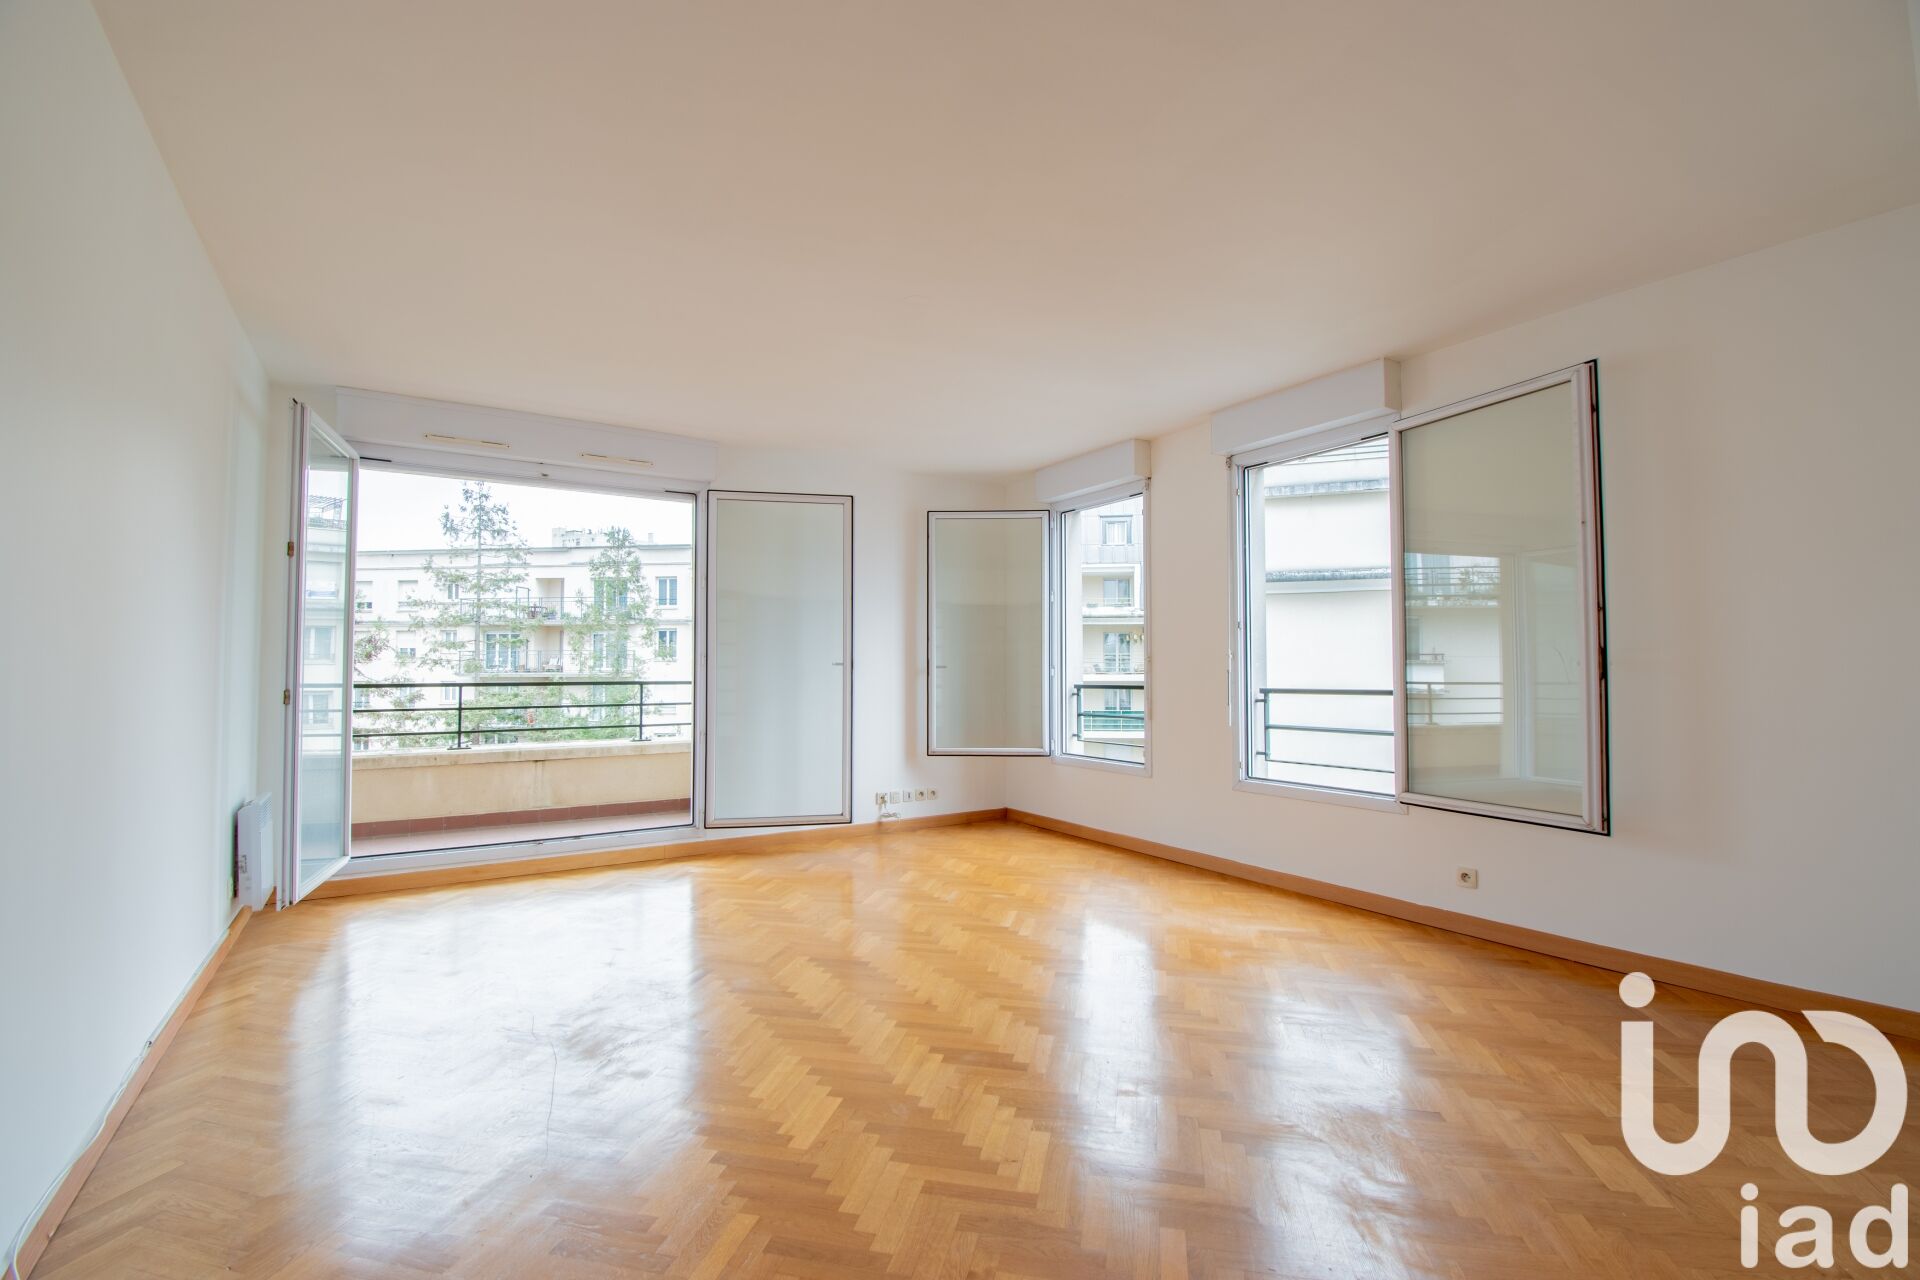 Appartement a louer malakoff - 3 pièce(s) - 60 m2 - Surfyn